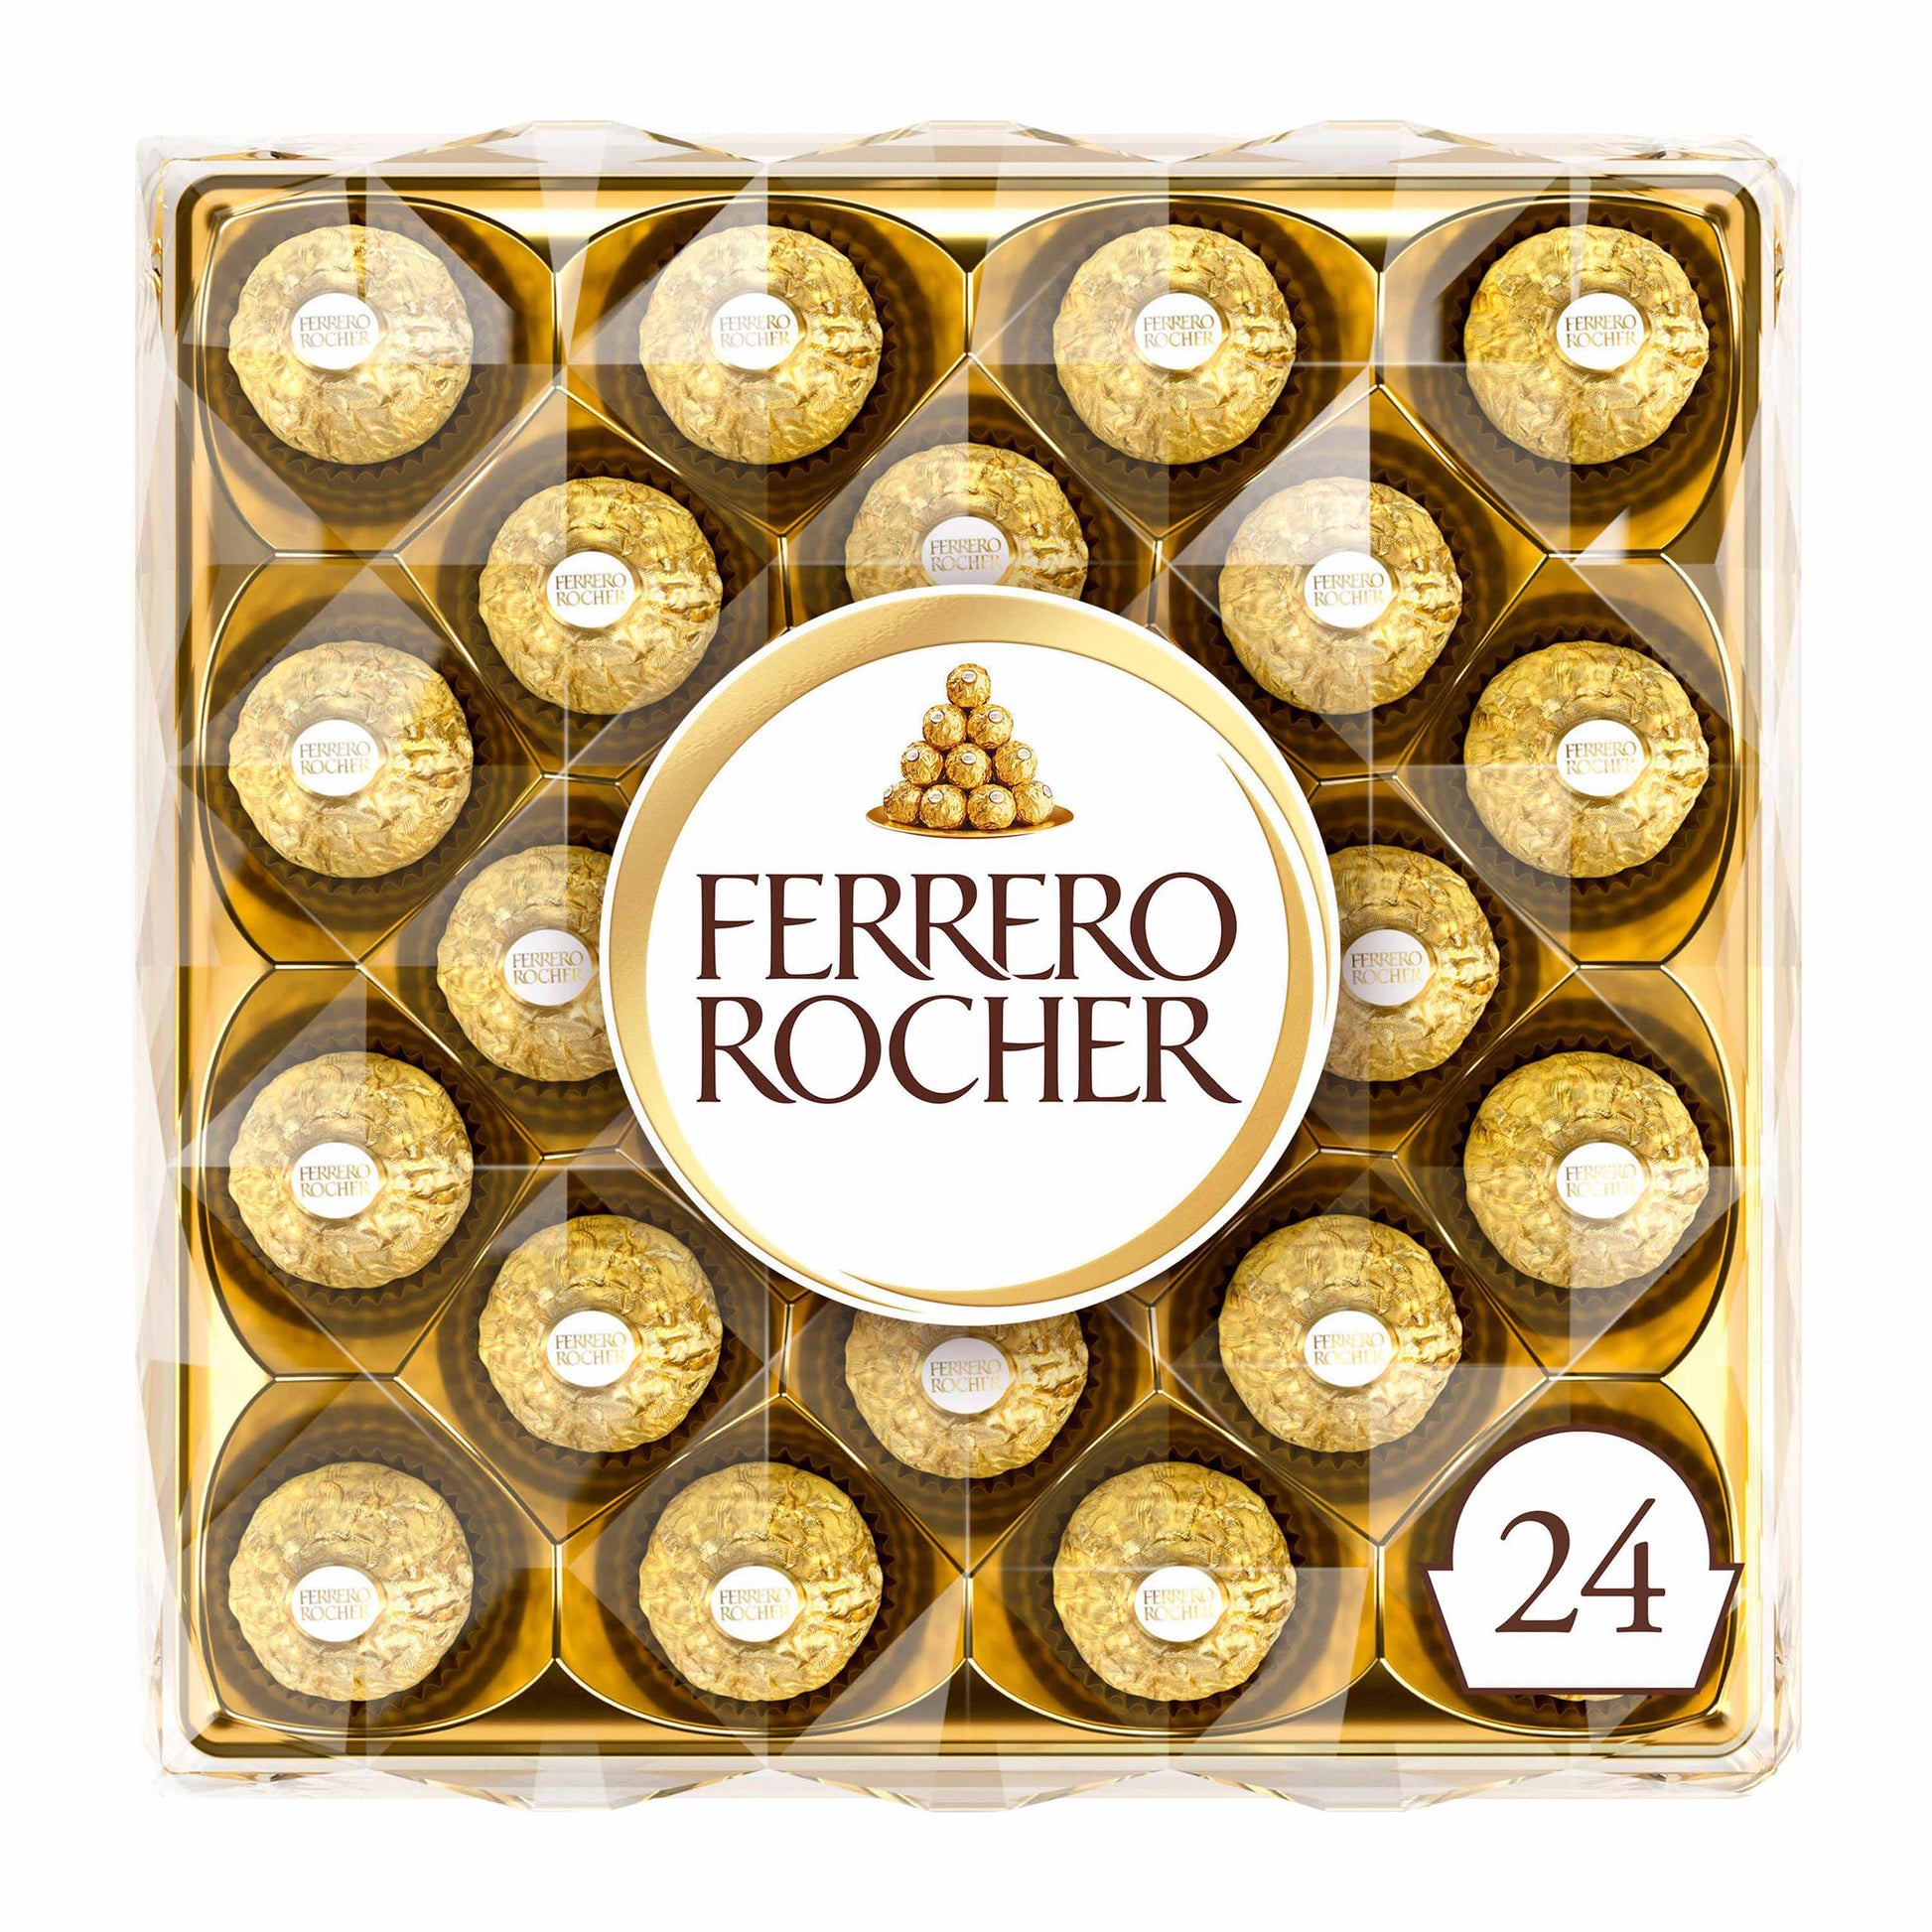 Ferrero Rocher Chocolate Pralines Gift Box 24 Pieces - 300g - Gift Message